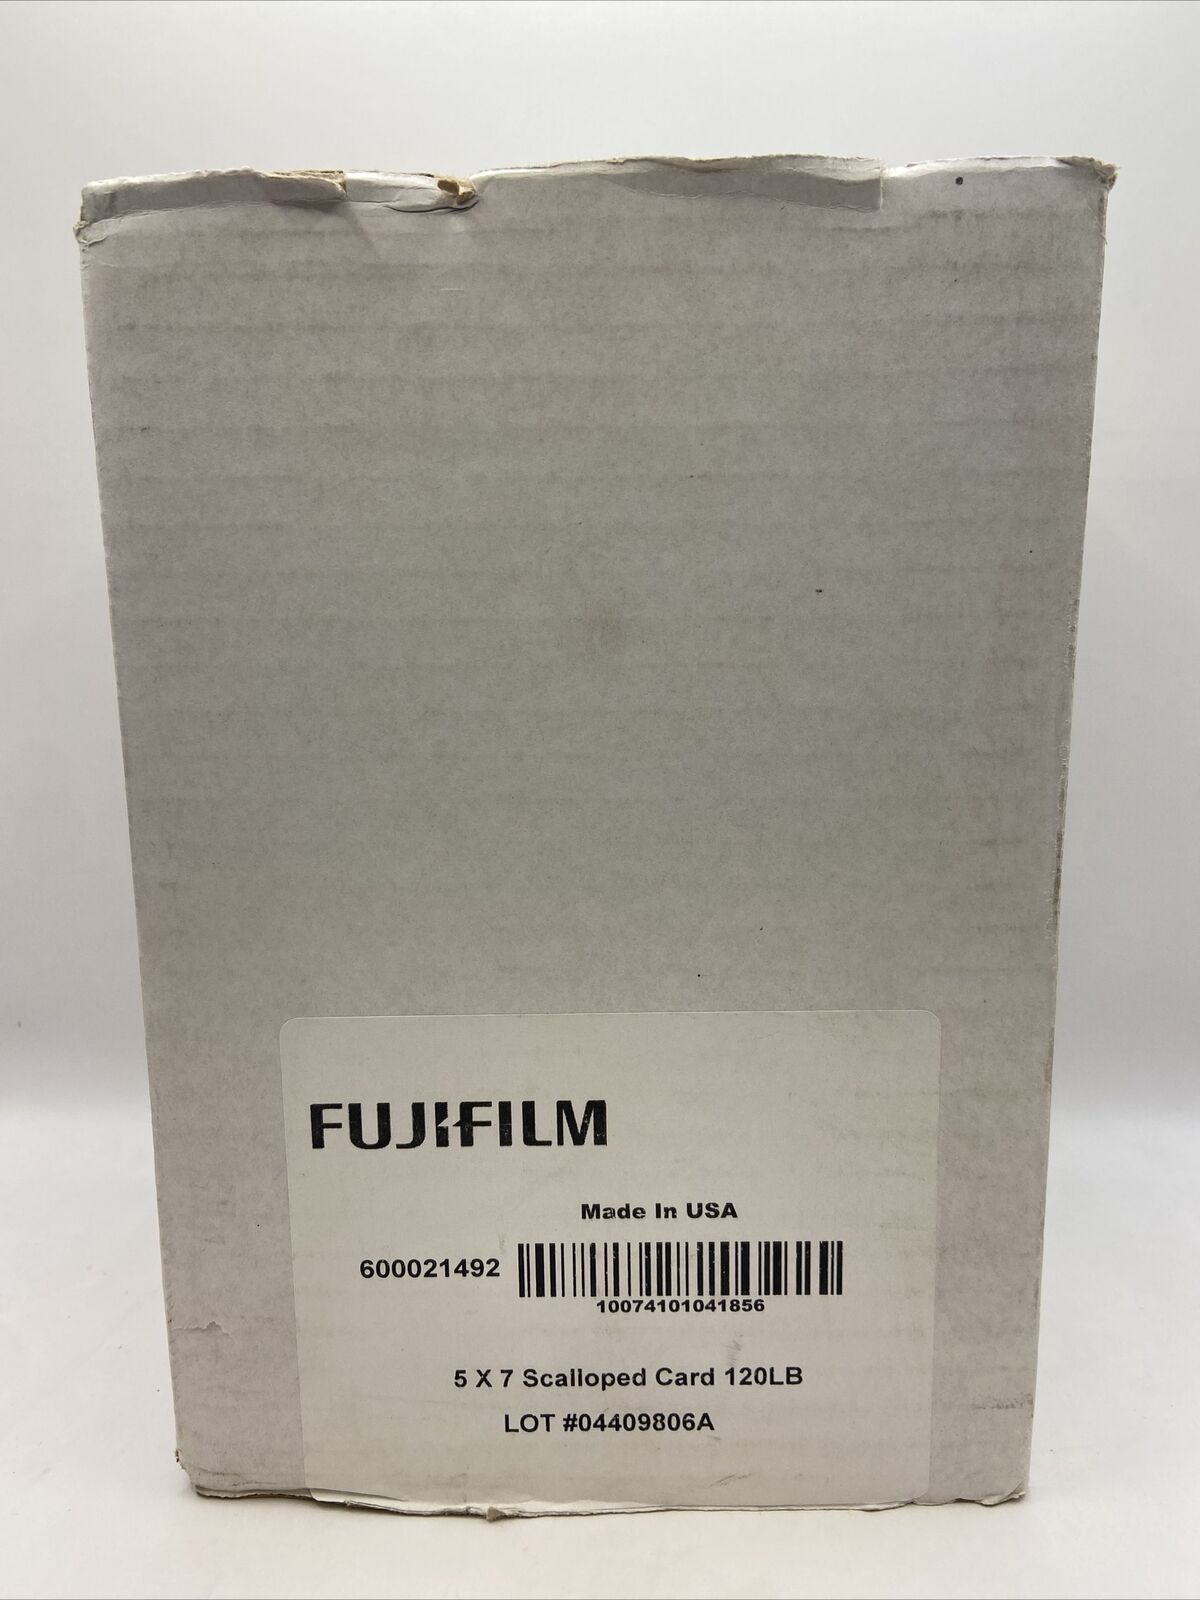 Fujifilm 5x7 Scalloped Card 120lb 600021492